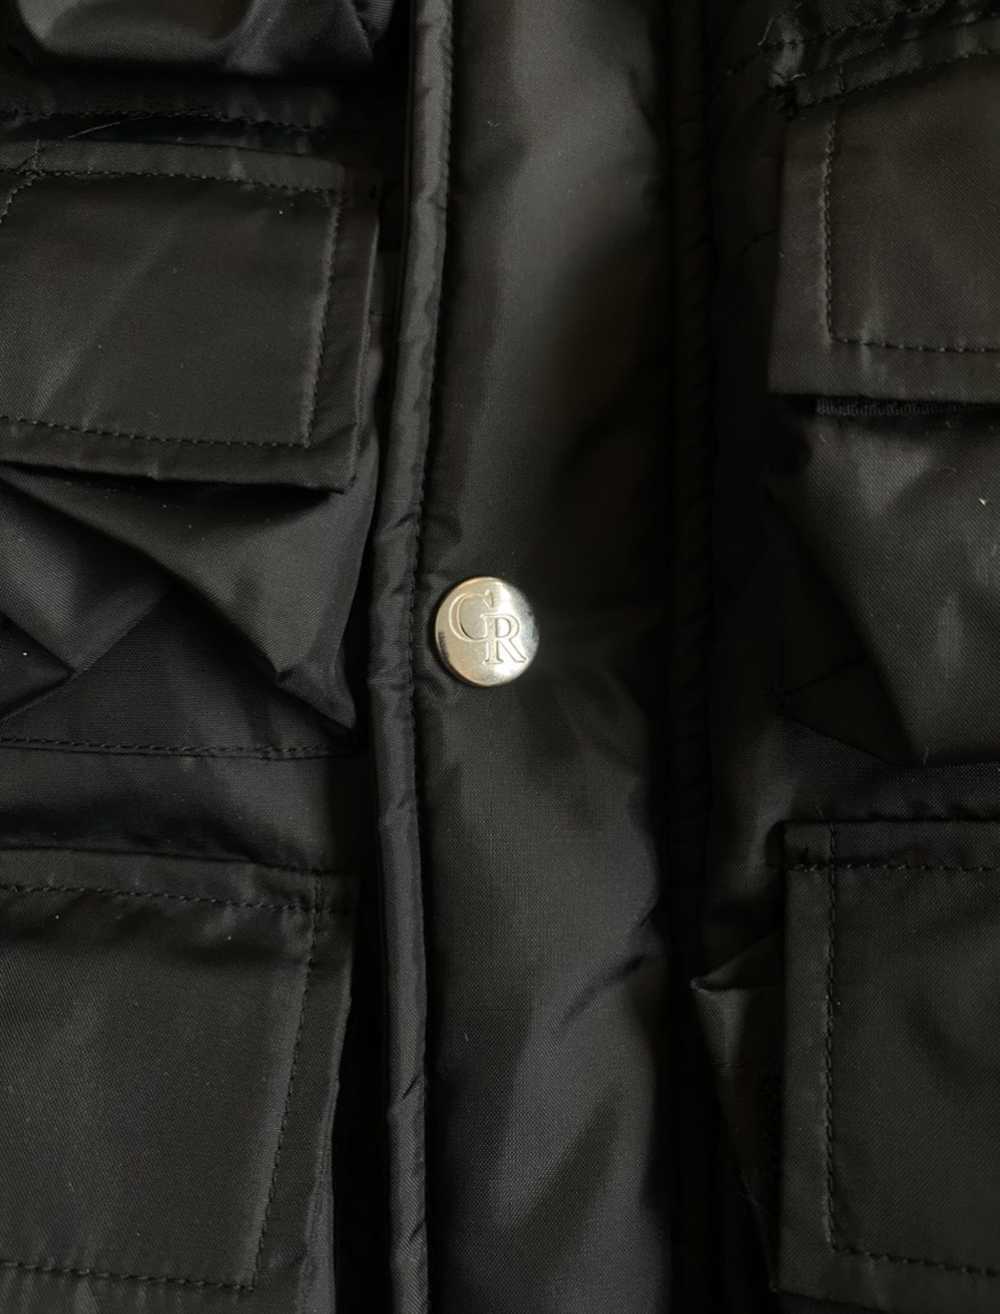 General Research 175 pocket parasite jacket - image 2